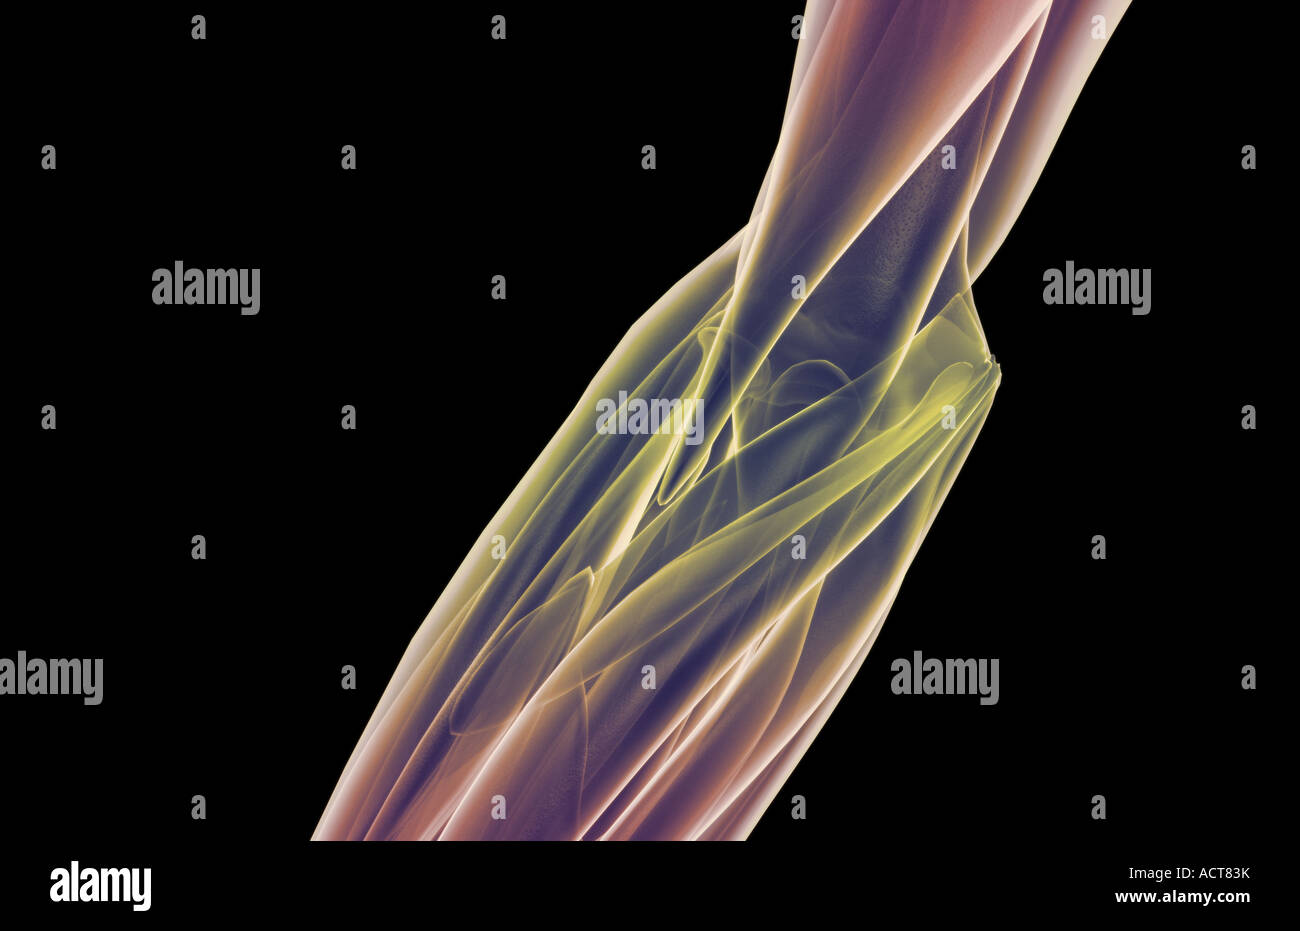 Elbow Anatomy Stock Photos & Elbow Anatomy Stock Images - Alamy